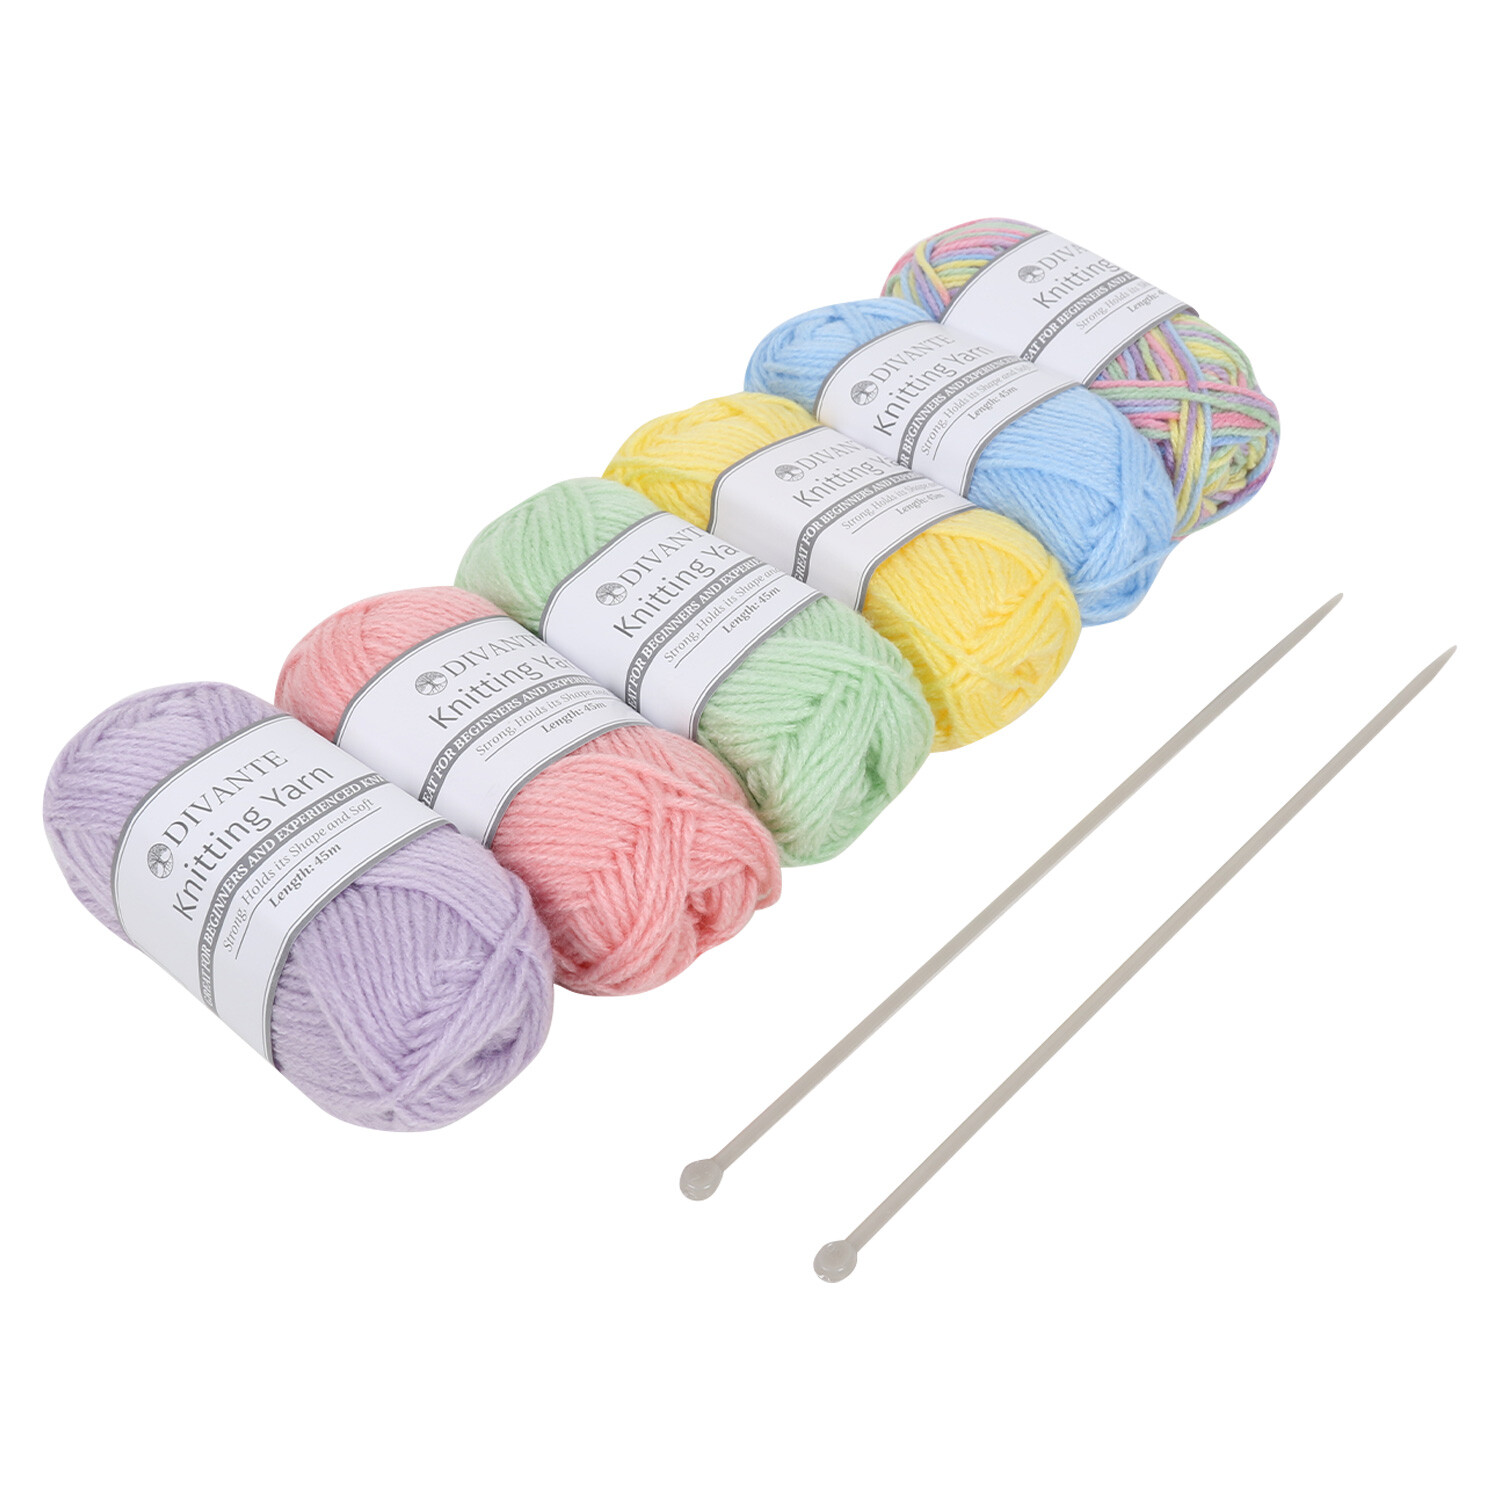 Divante Yarn Multipack and Knitting Needles Image 2